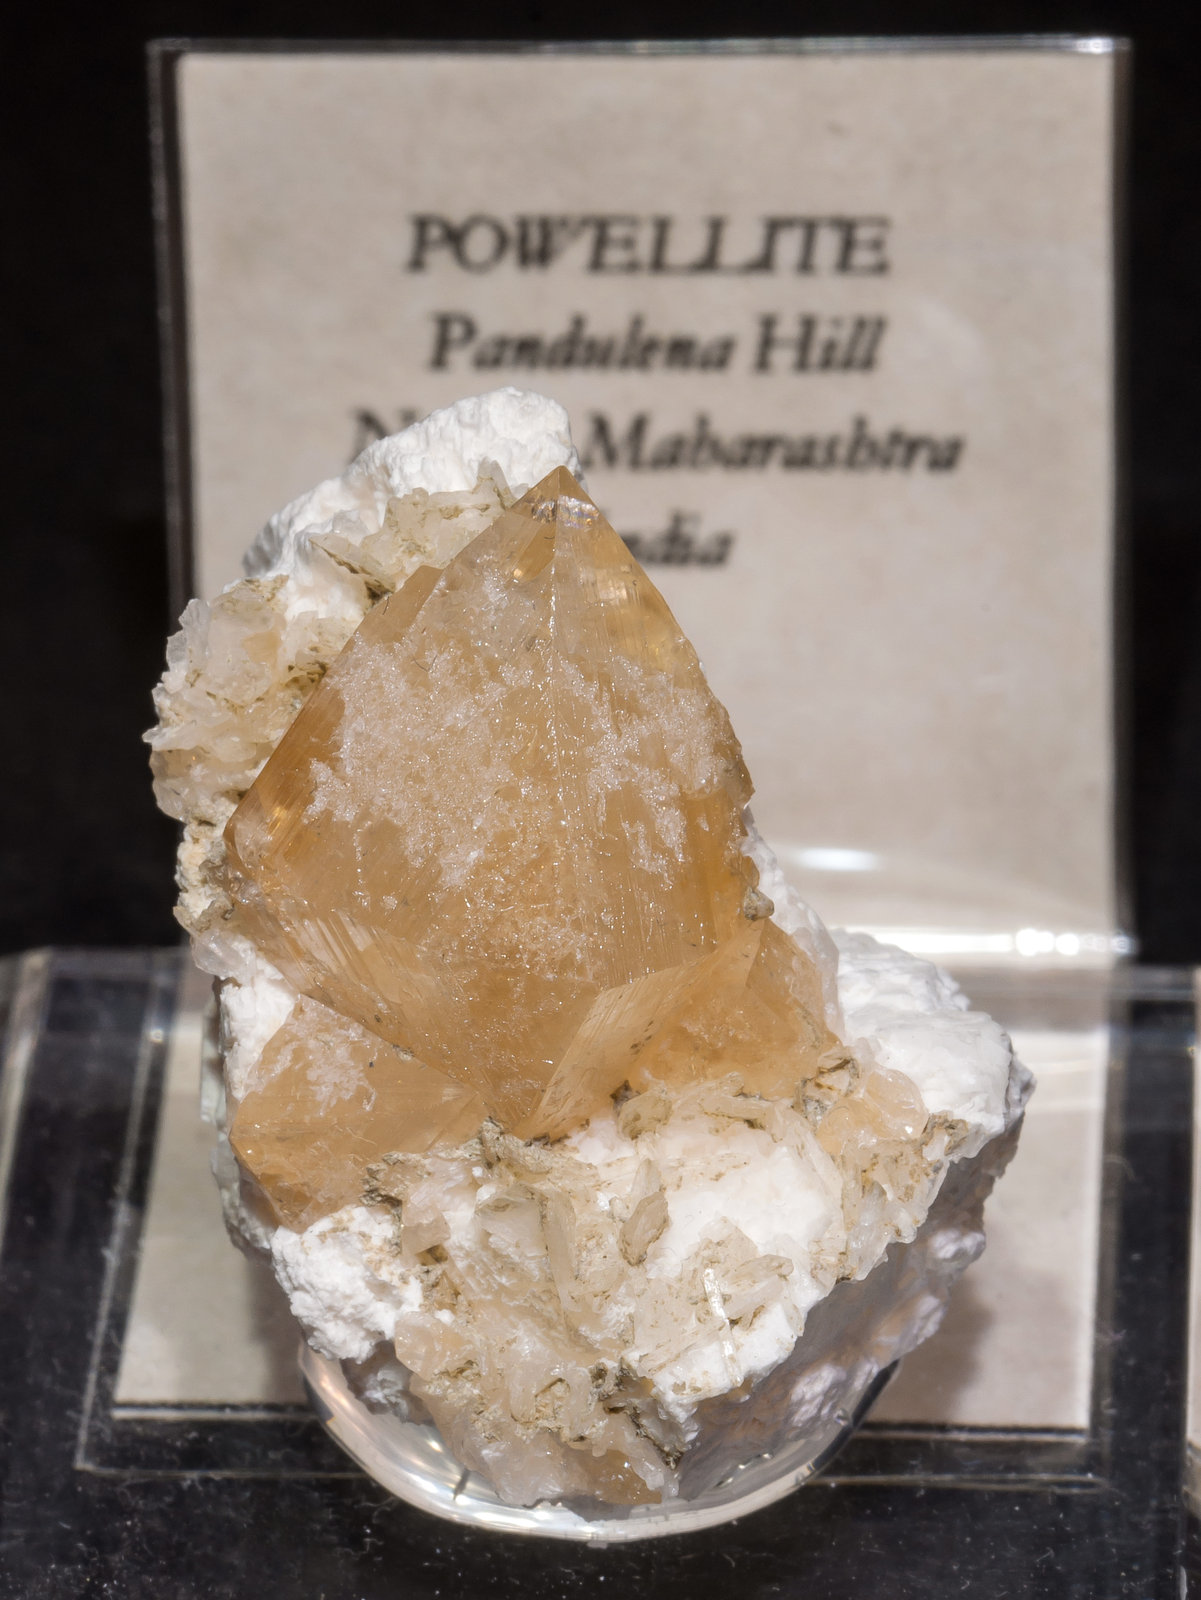 specimens/s_imagesAL5/Powellite-TC87AL5f1.jpg